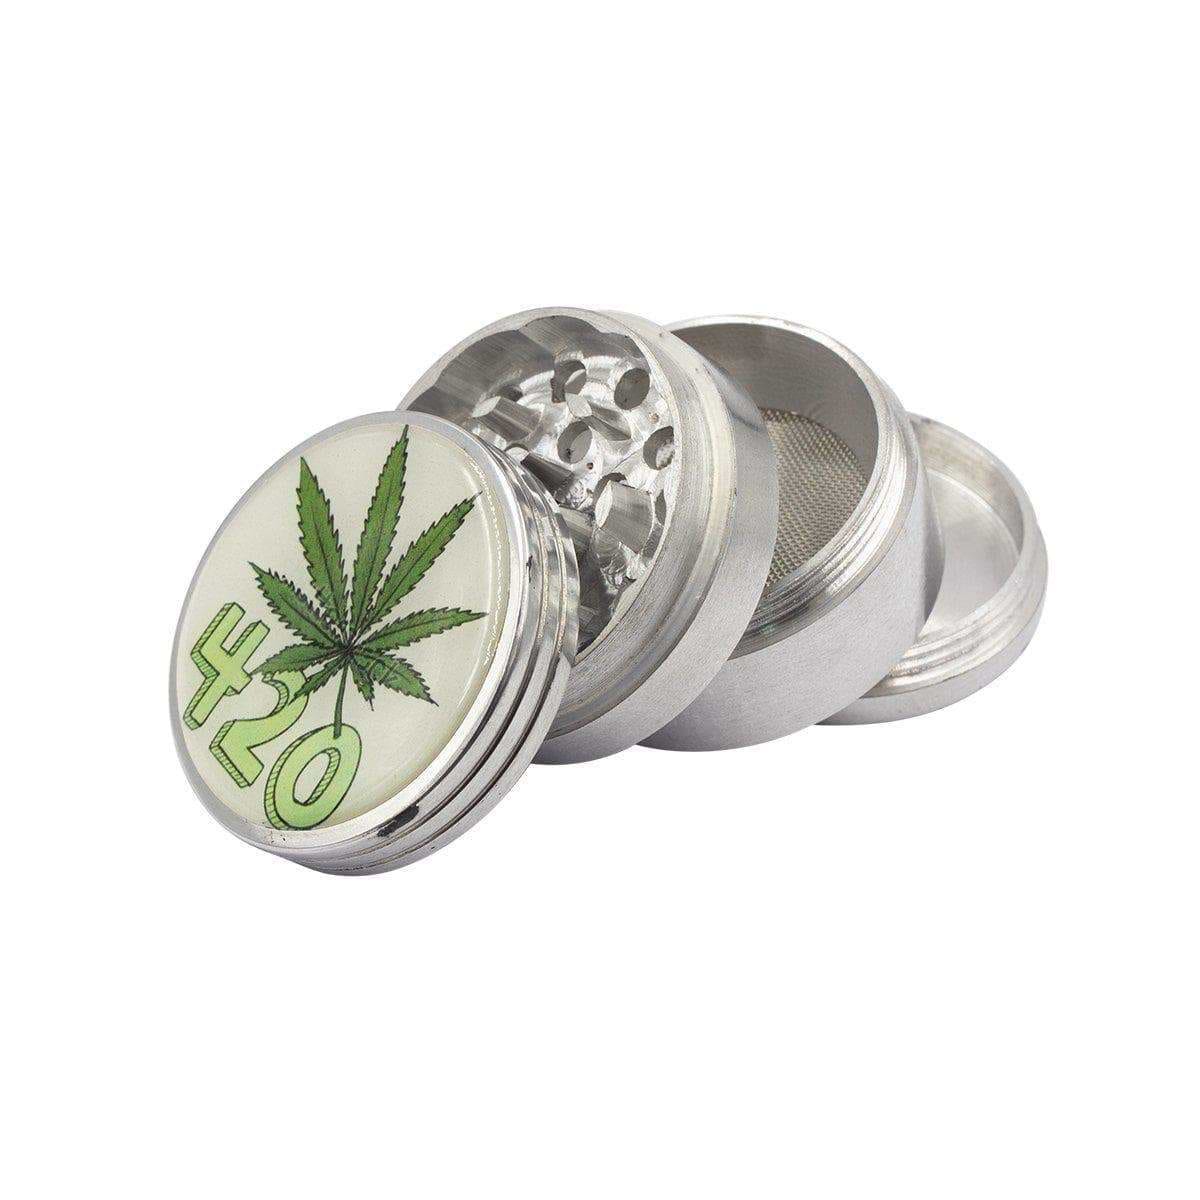 Dope 42-mm metal herb grinder smoking accessory 4 parts smooth metallic weed leaf design 420 logo on the lid